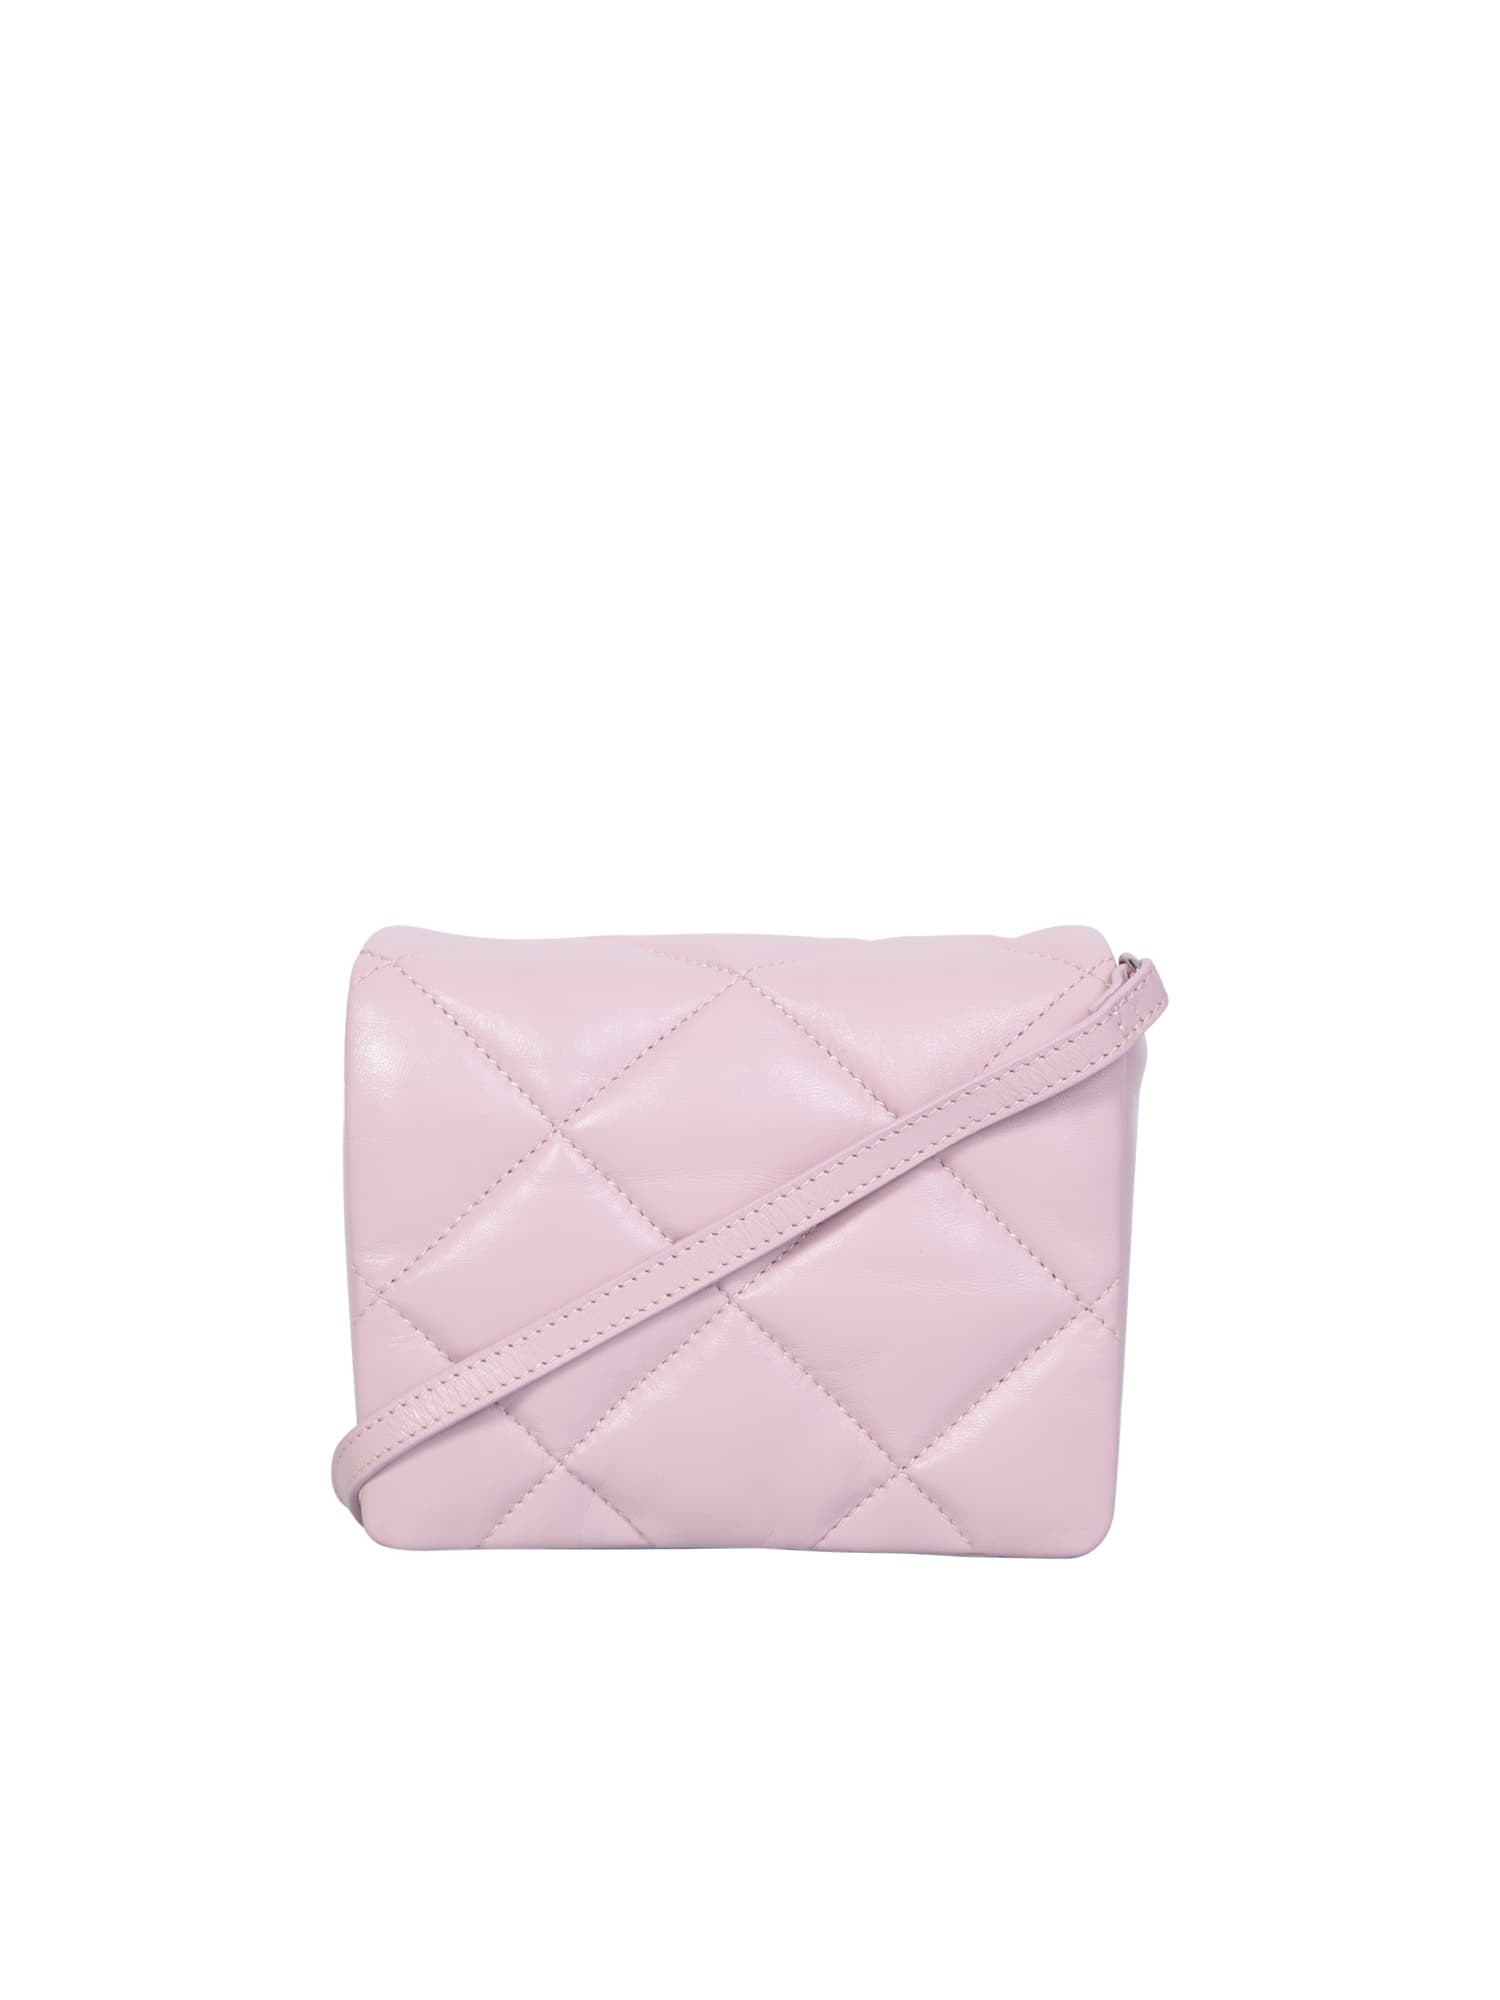 Hestia Small Pink Bag